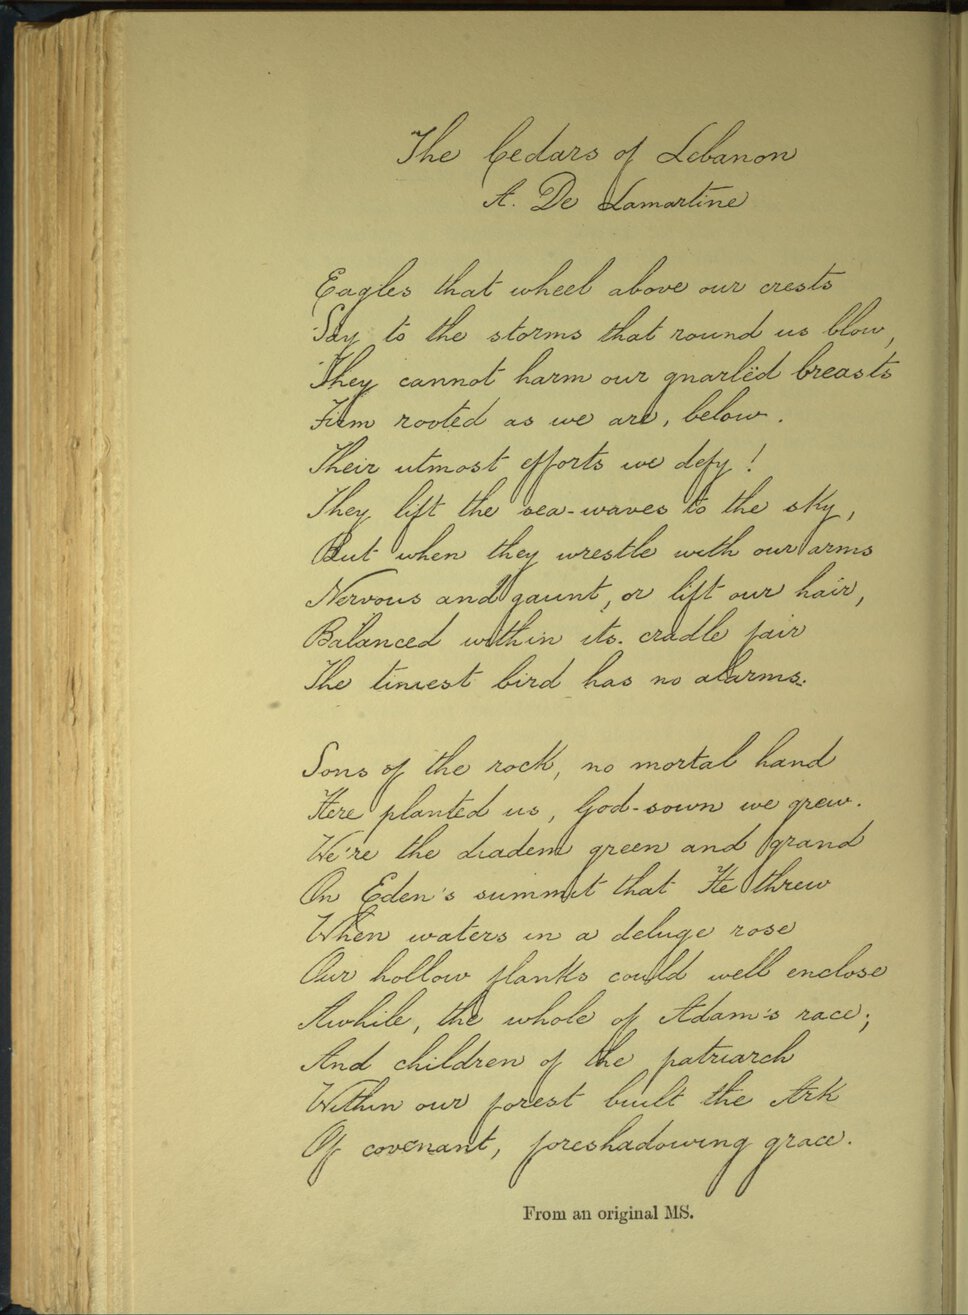 Handwritten poem titled the “The Cedars of Lebanon.”